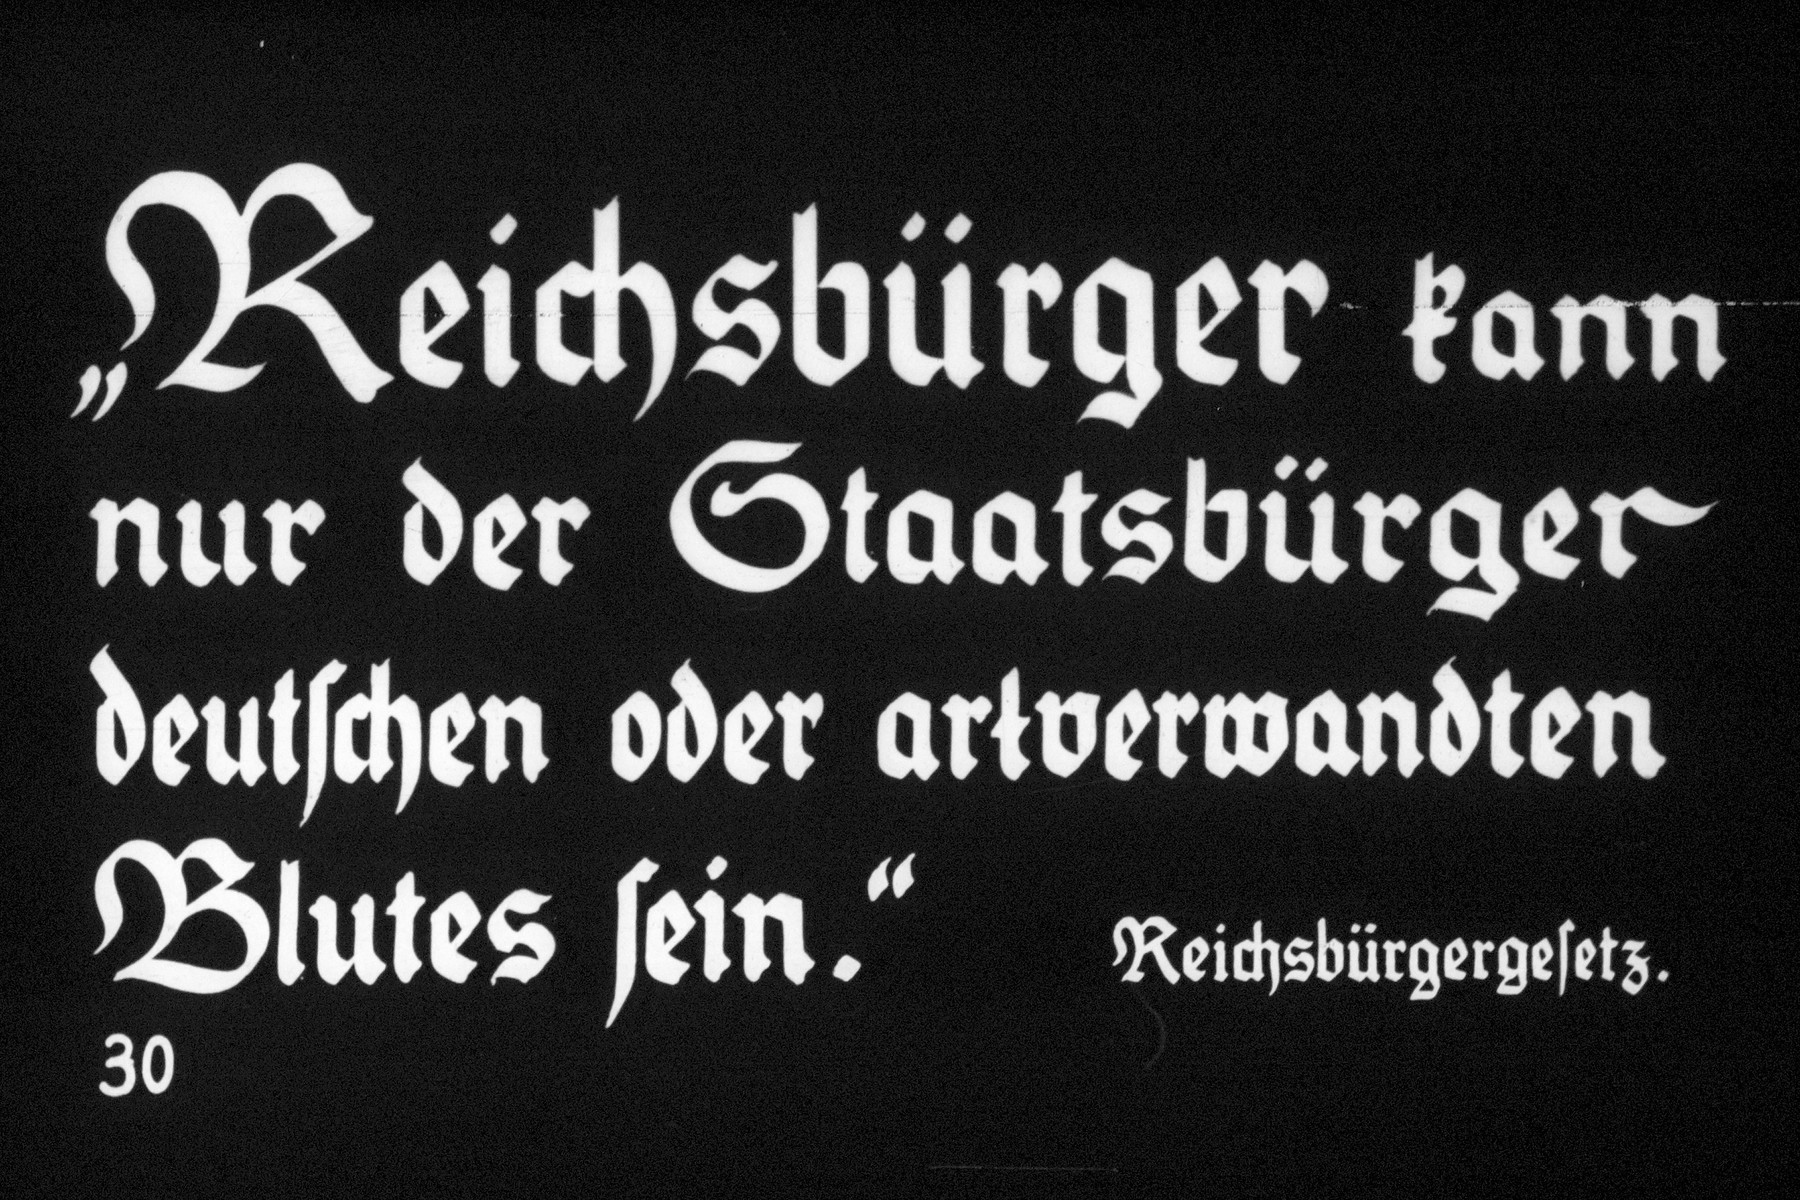 30th Nazi propaganda slide of a Hitler Youth educational presentation entitled "Germany Overcomes Jewry."

"Reichsbürger kann nur der Staatsburger oder artverwandten Blutes"
//
"Reich citizens can only have German or Aryan blood"